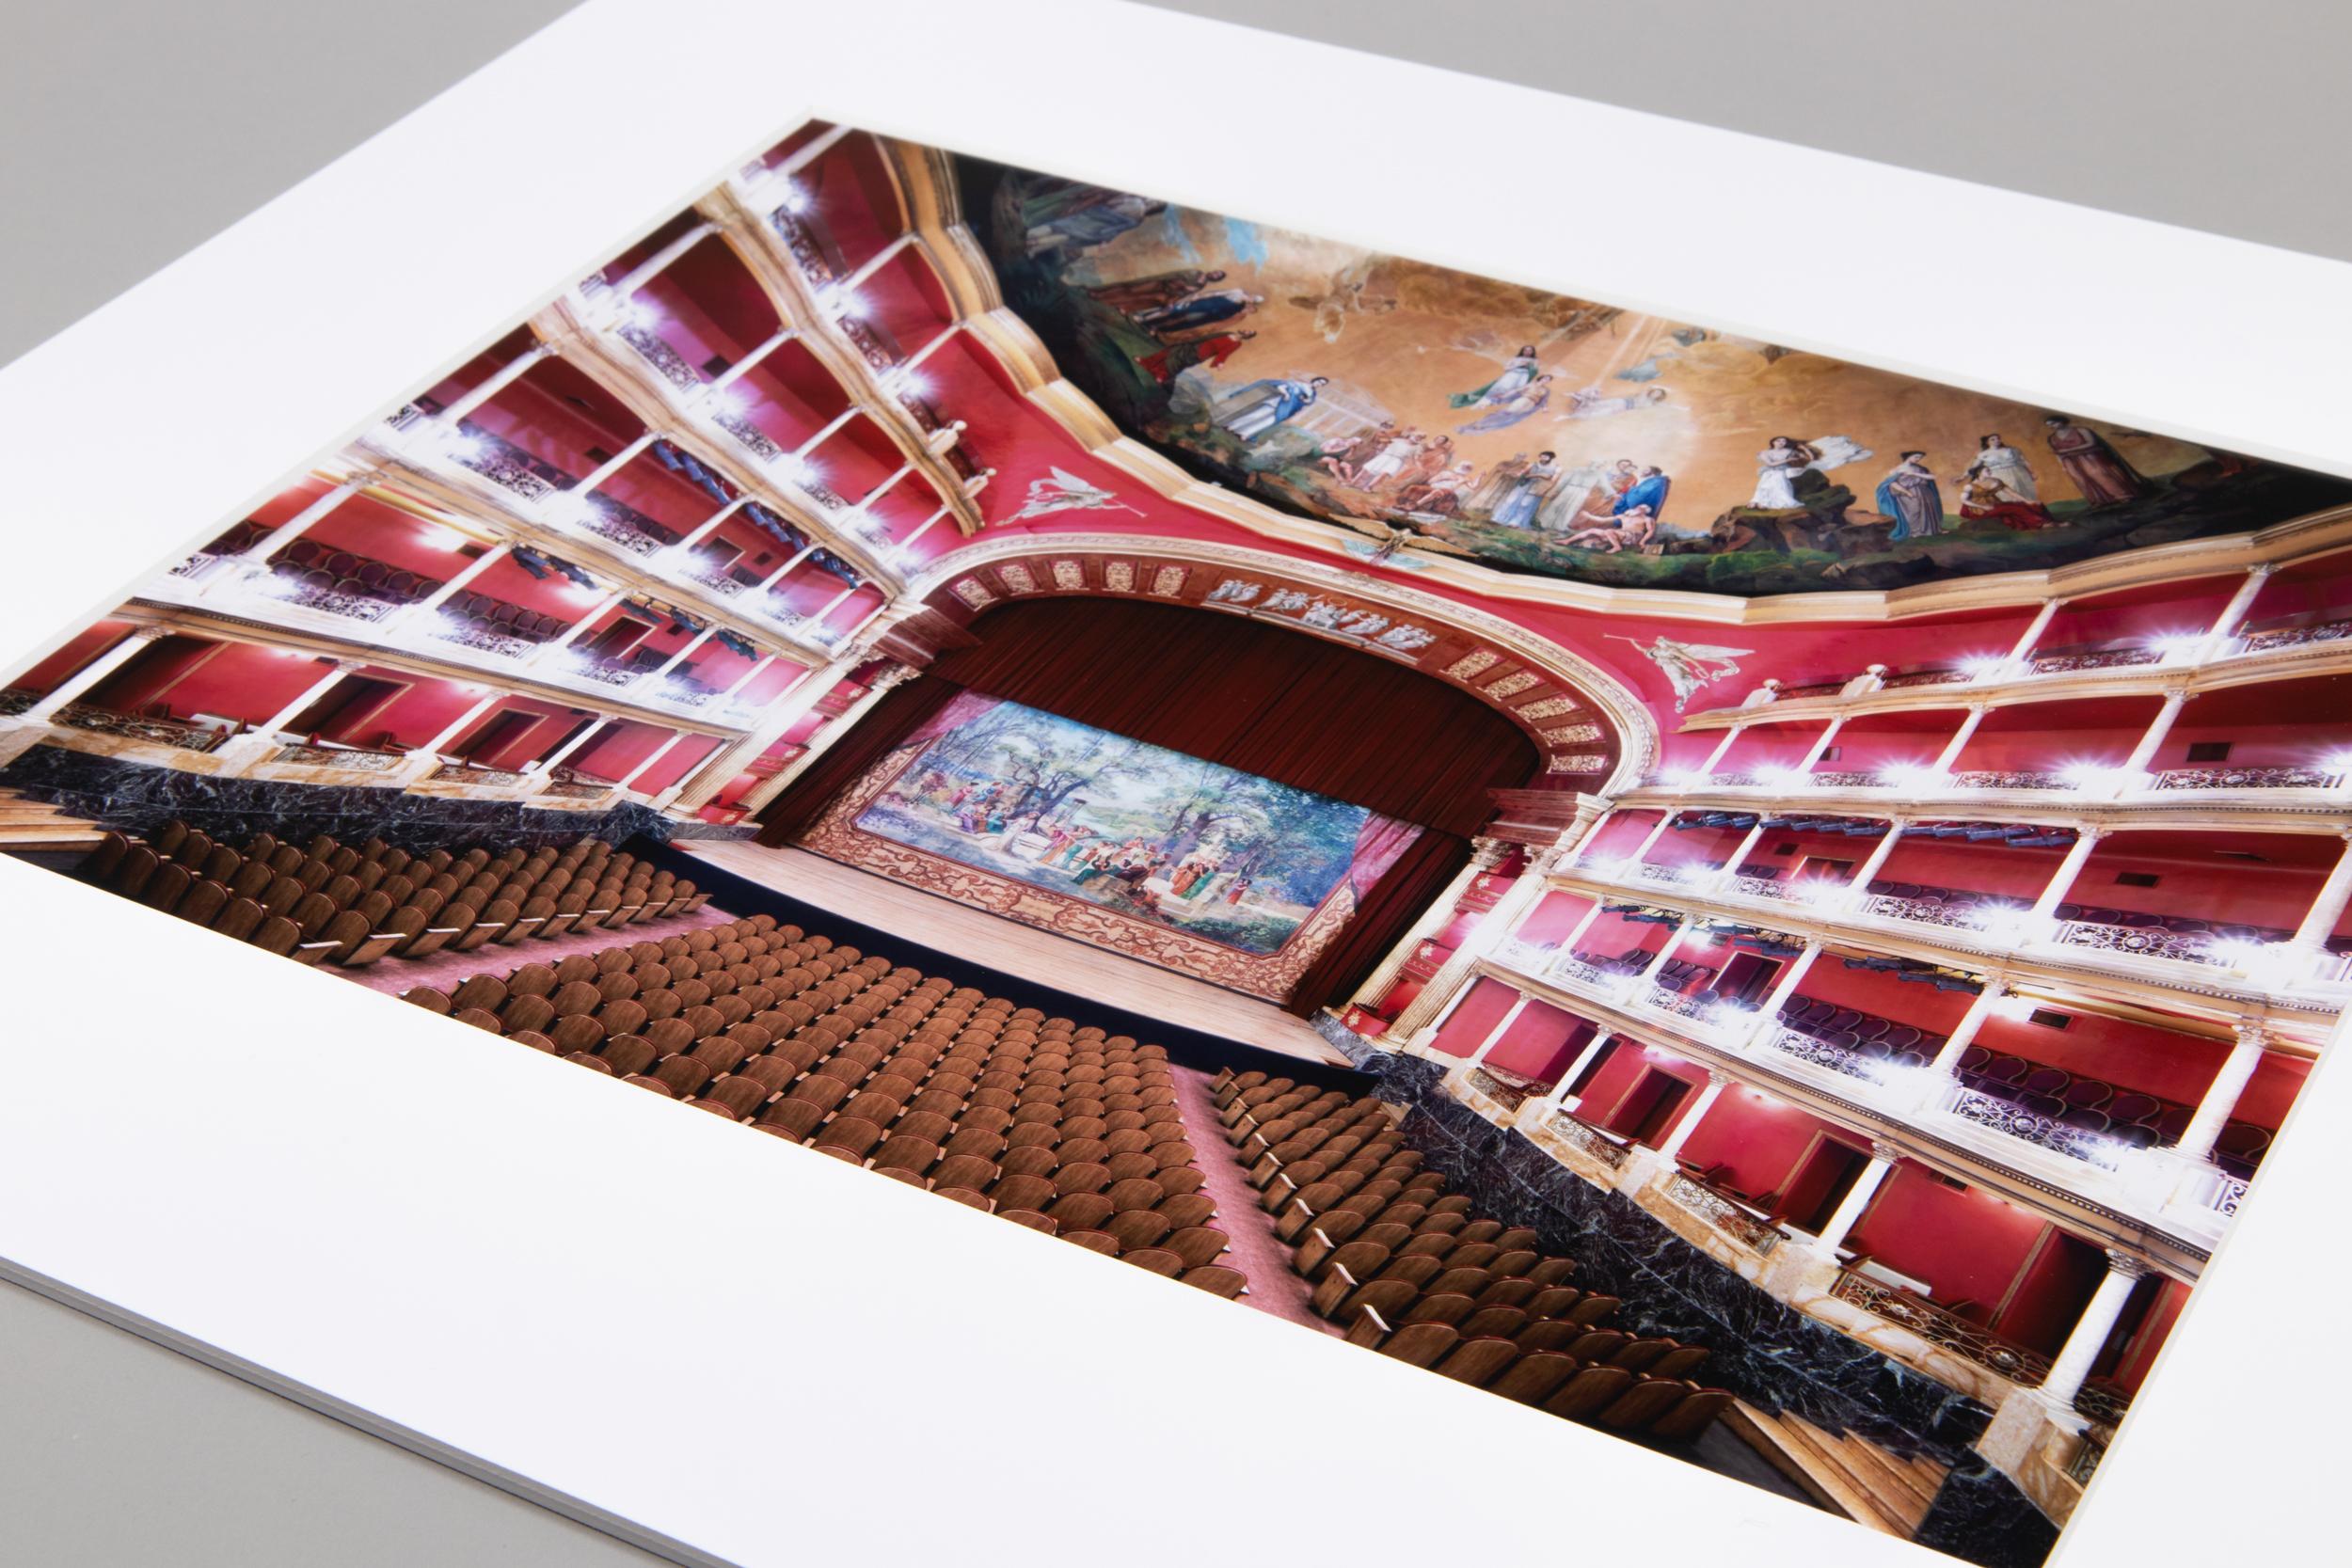 Candida Höfer (German, b. 1944)
Teatro Degollado Guadalajara III, 2015
Medium: C-Print
Dimensions: 30 × 39.2 cm (38 x 47 cm)
Edition of 100: Hand signed on label, verso
Condition: Excellent